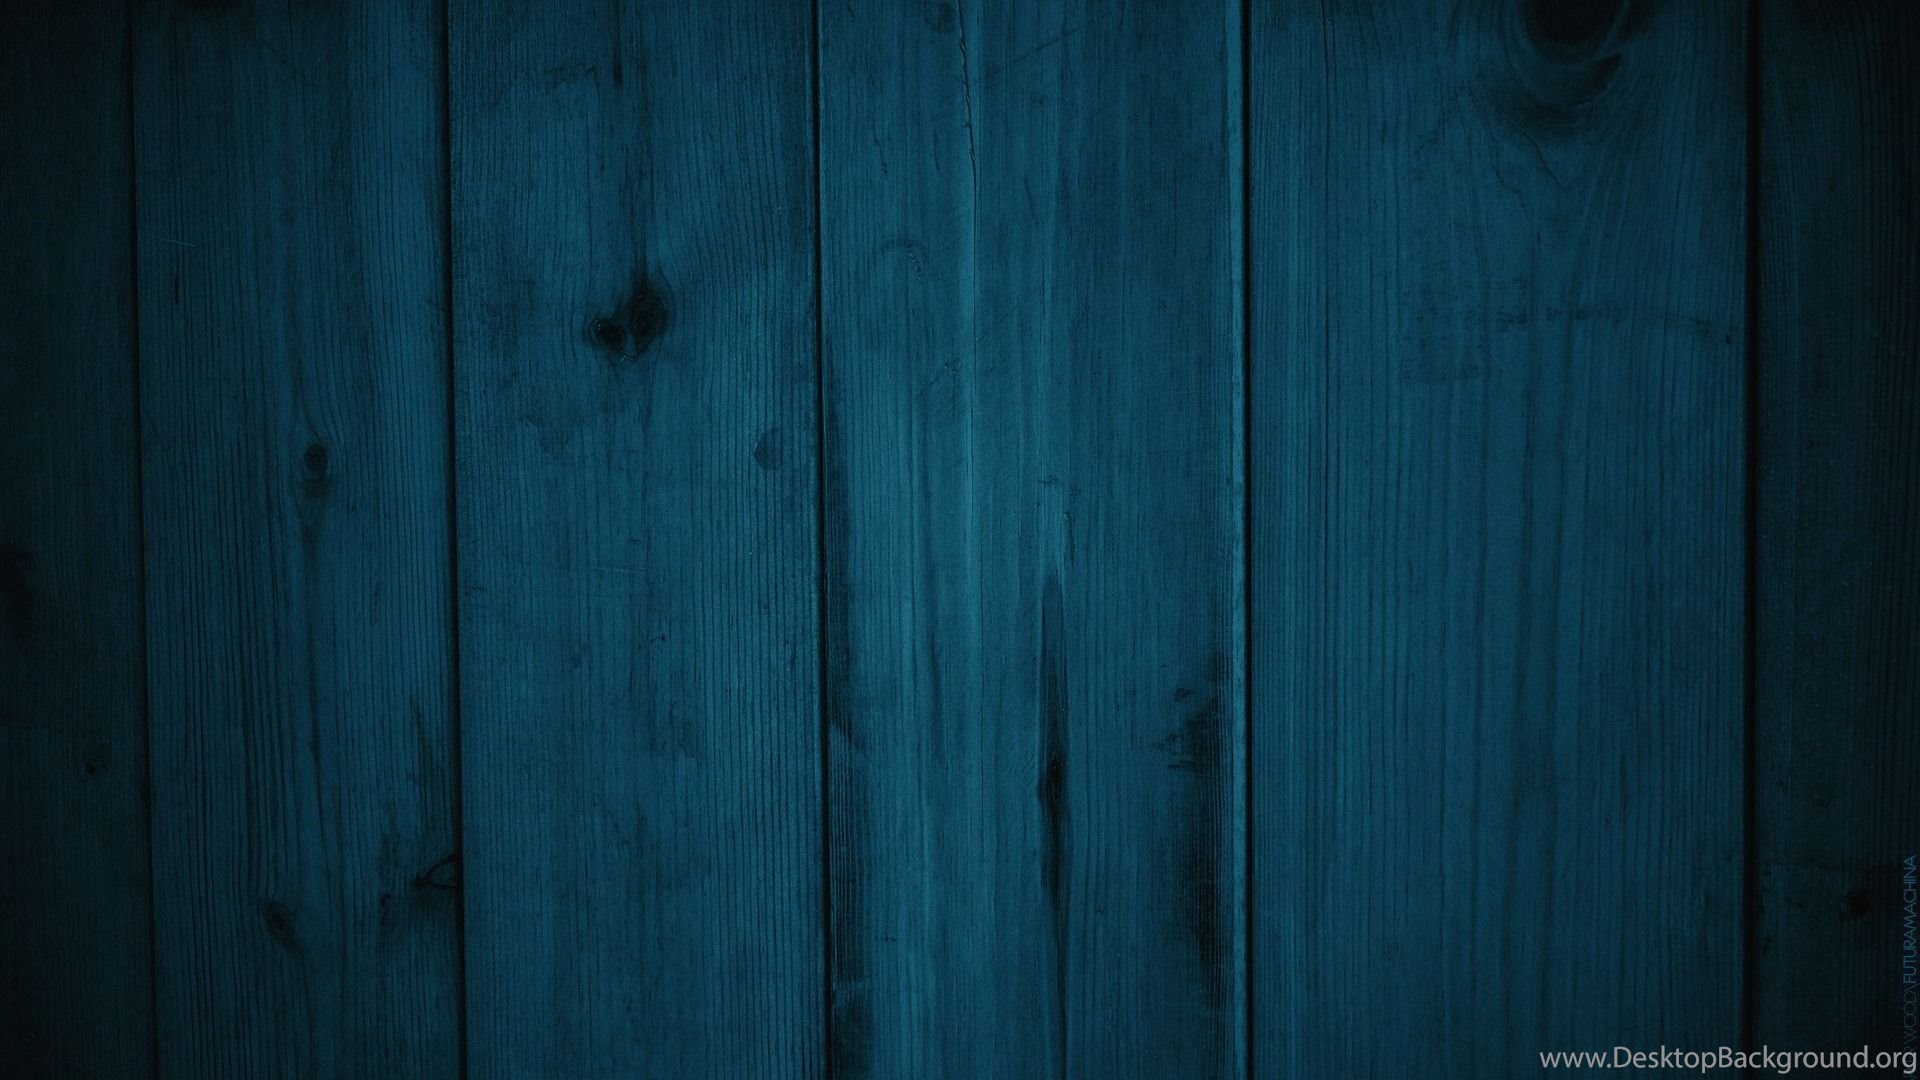 Blue and green wood 1920 X 1080 Wallpaper Desktop Background